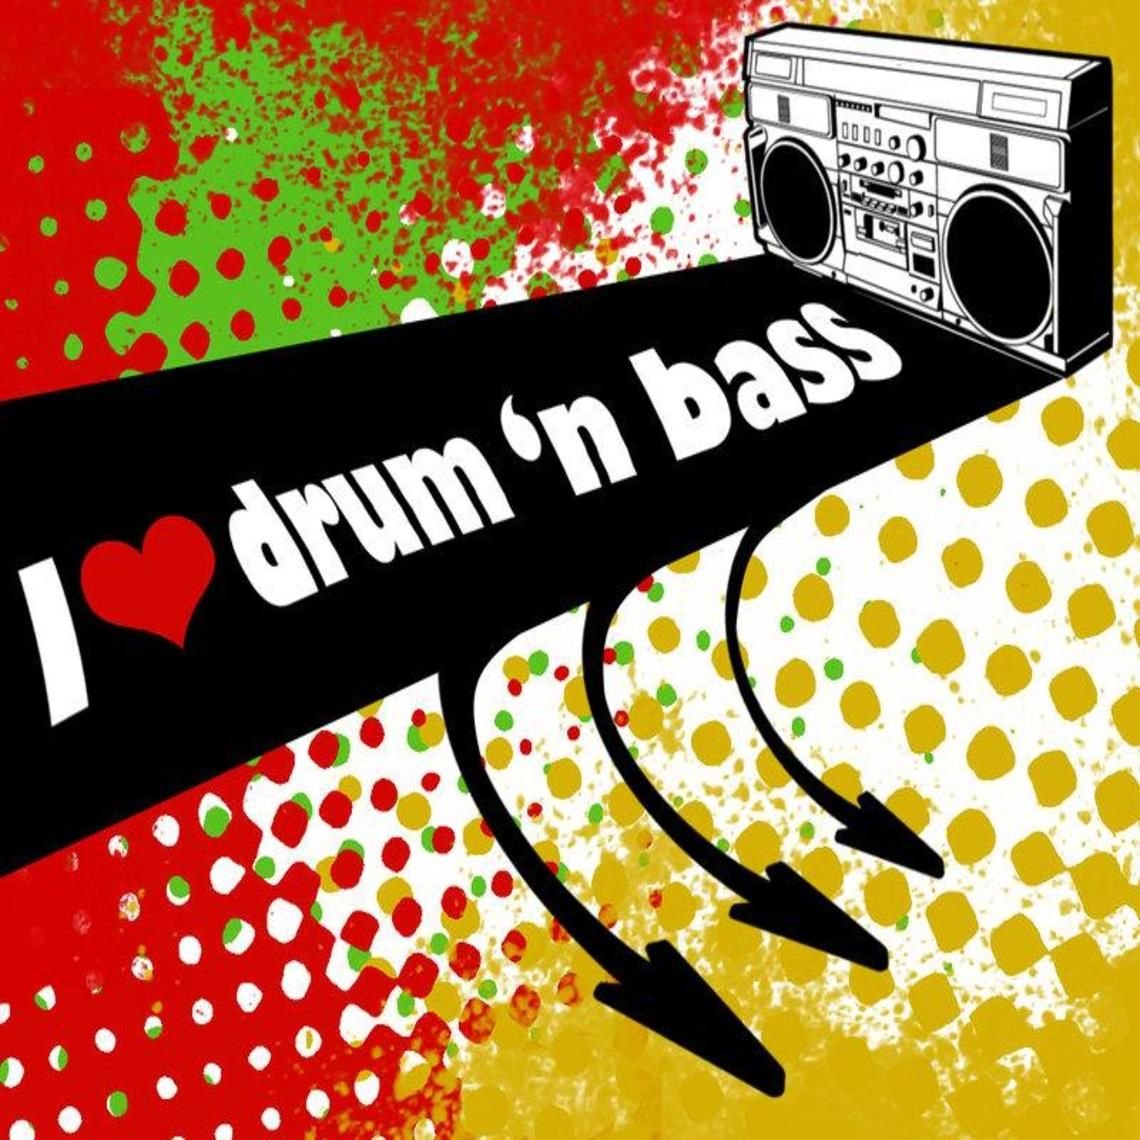 Live drum and bass. Drum and Bass картинки. Символ драм энд бейс. Драм-н-бейс картинки. Радио драм н басс.